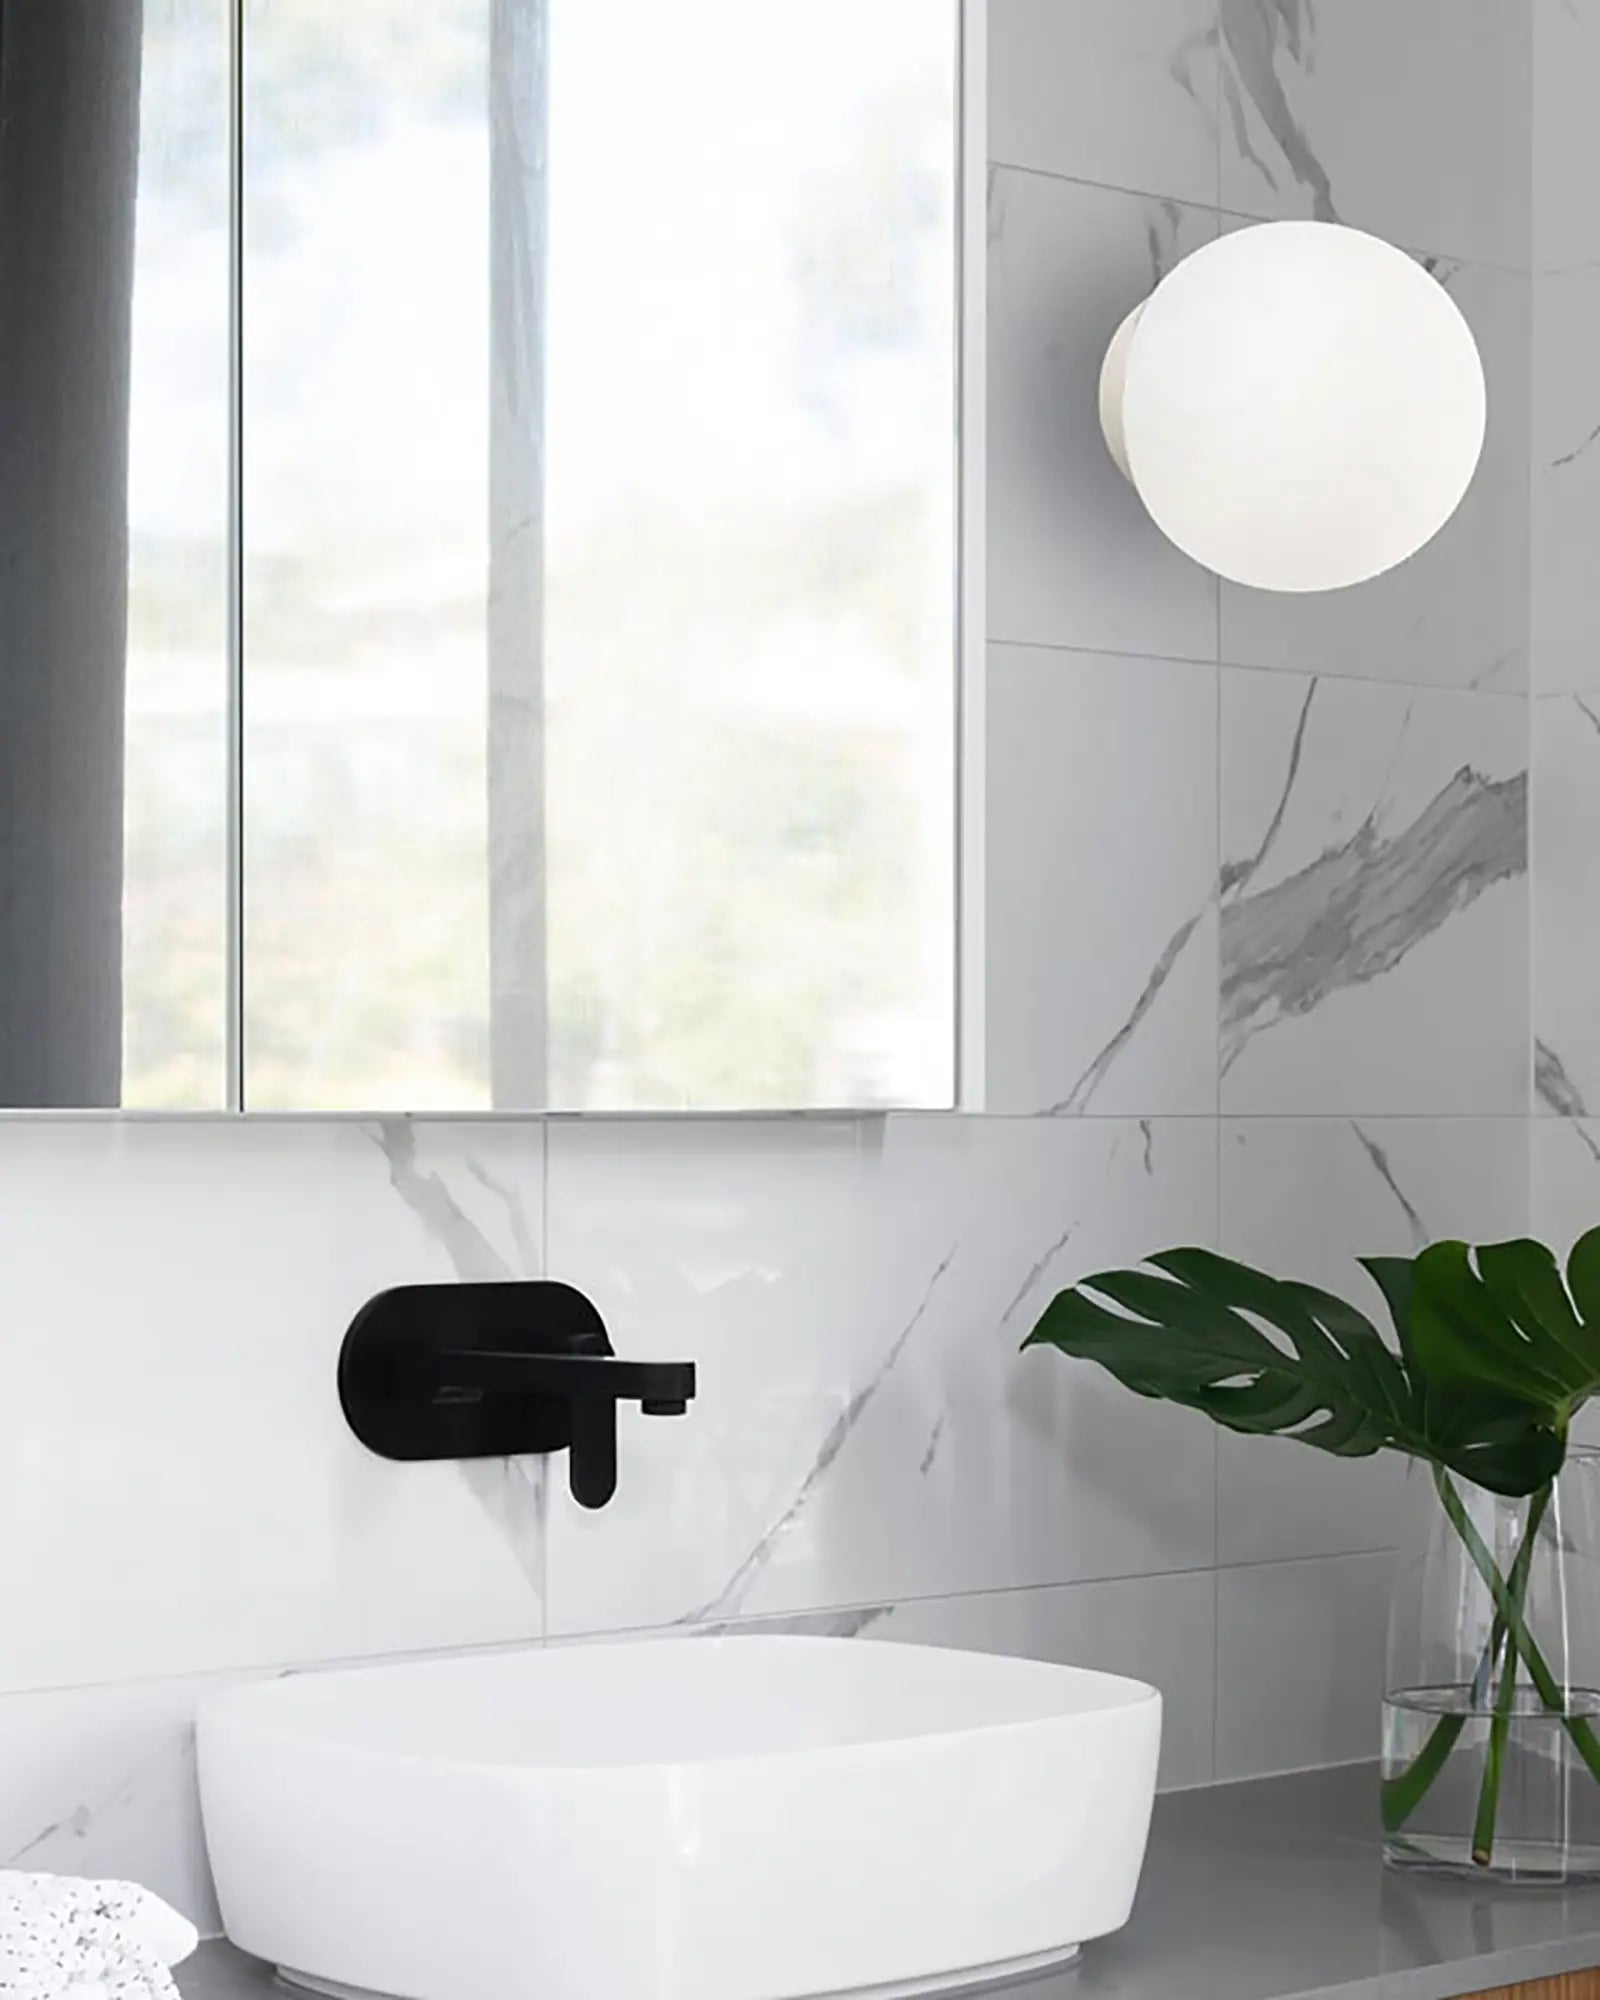 Mapa orb wall light in a bathroom on the mirror side